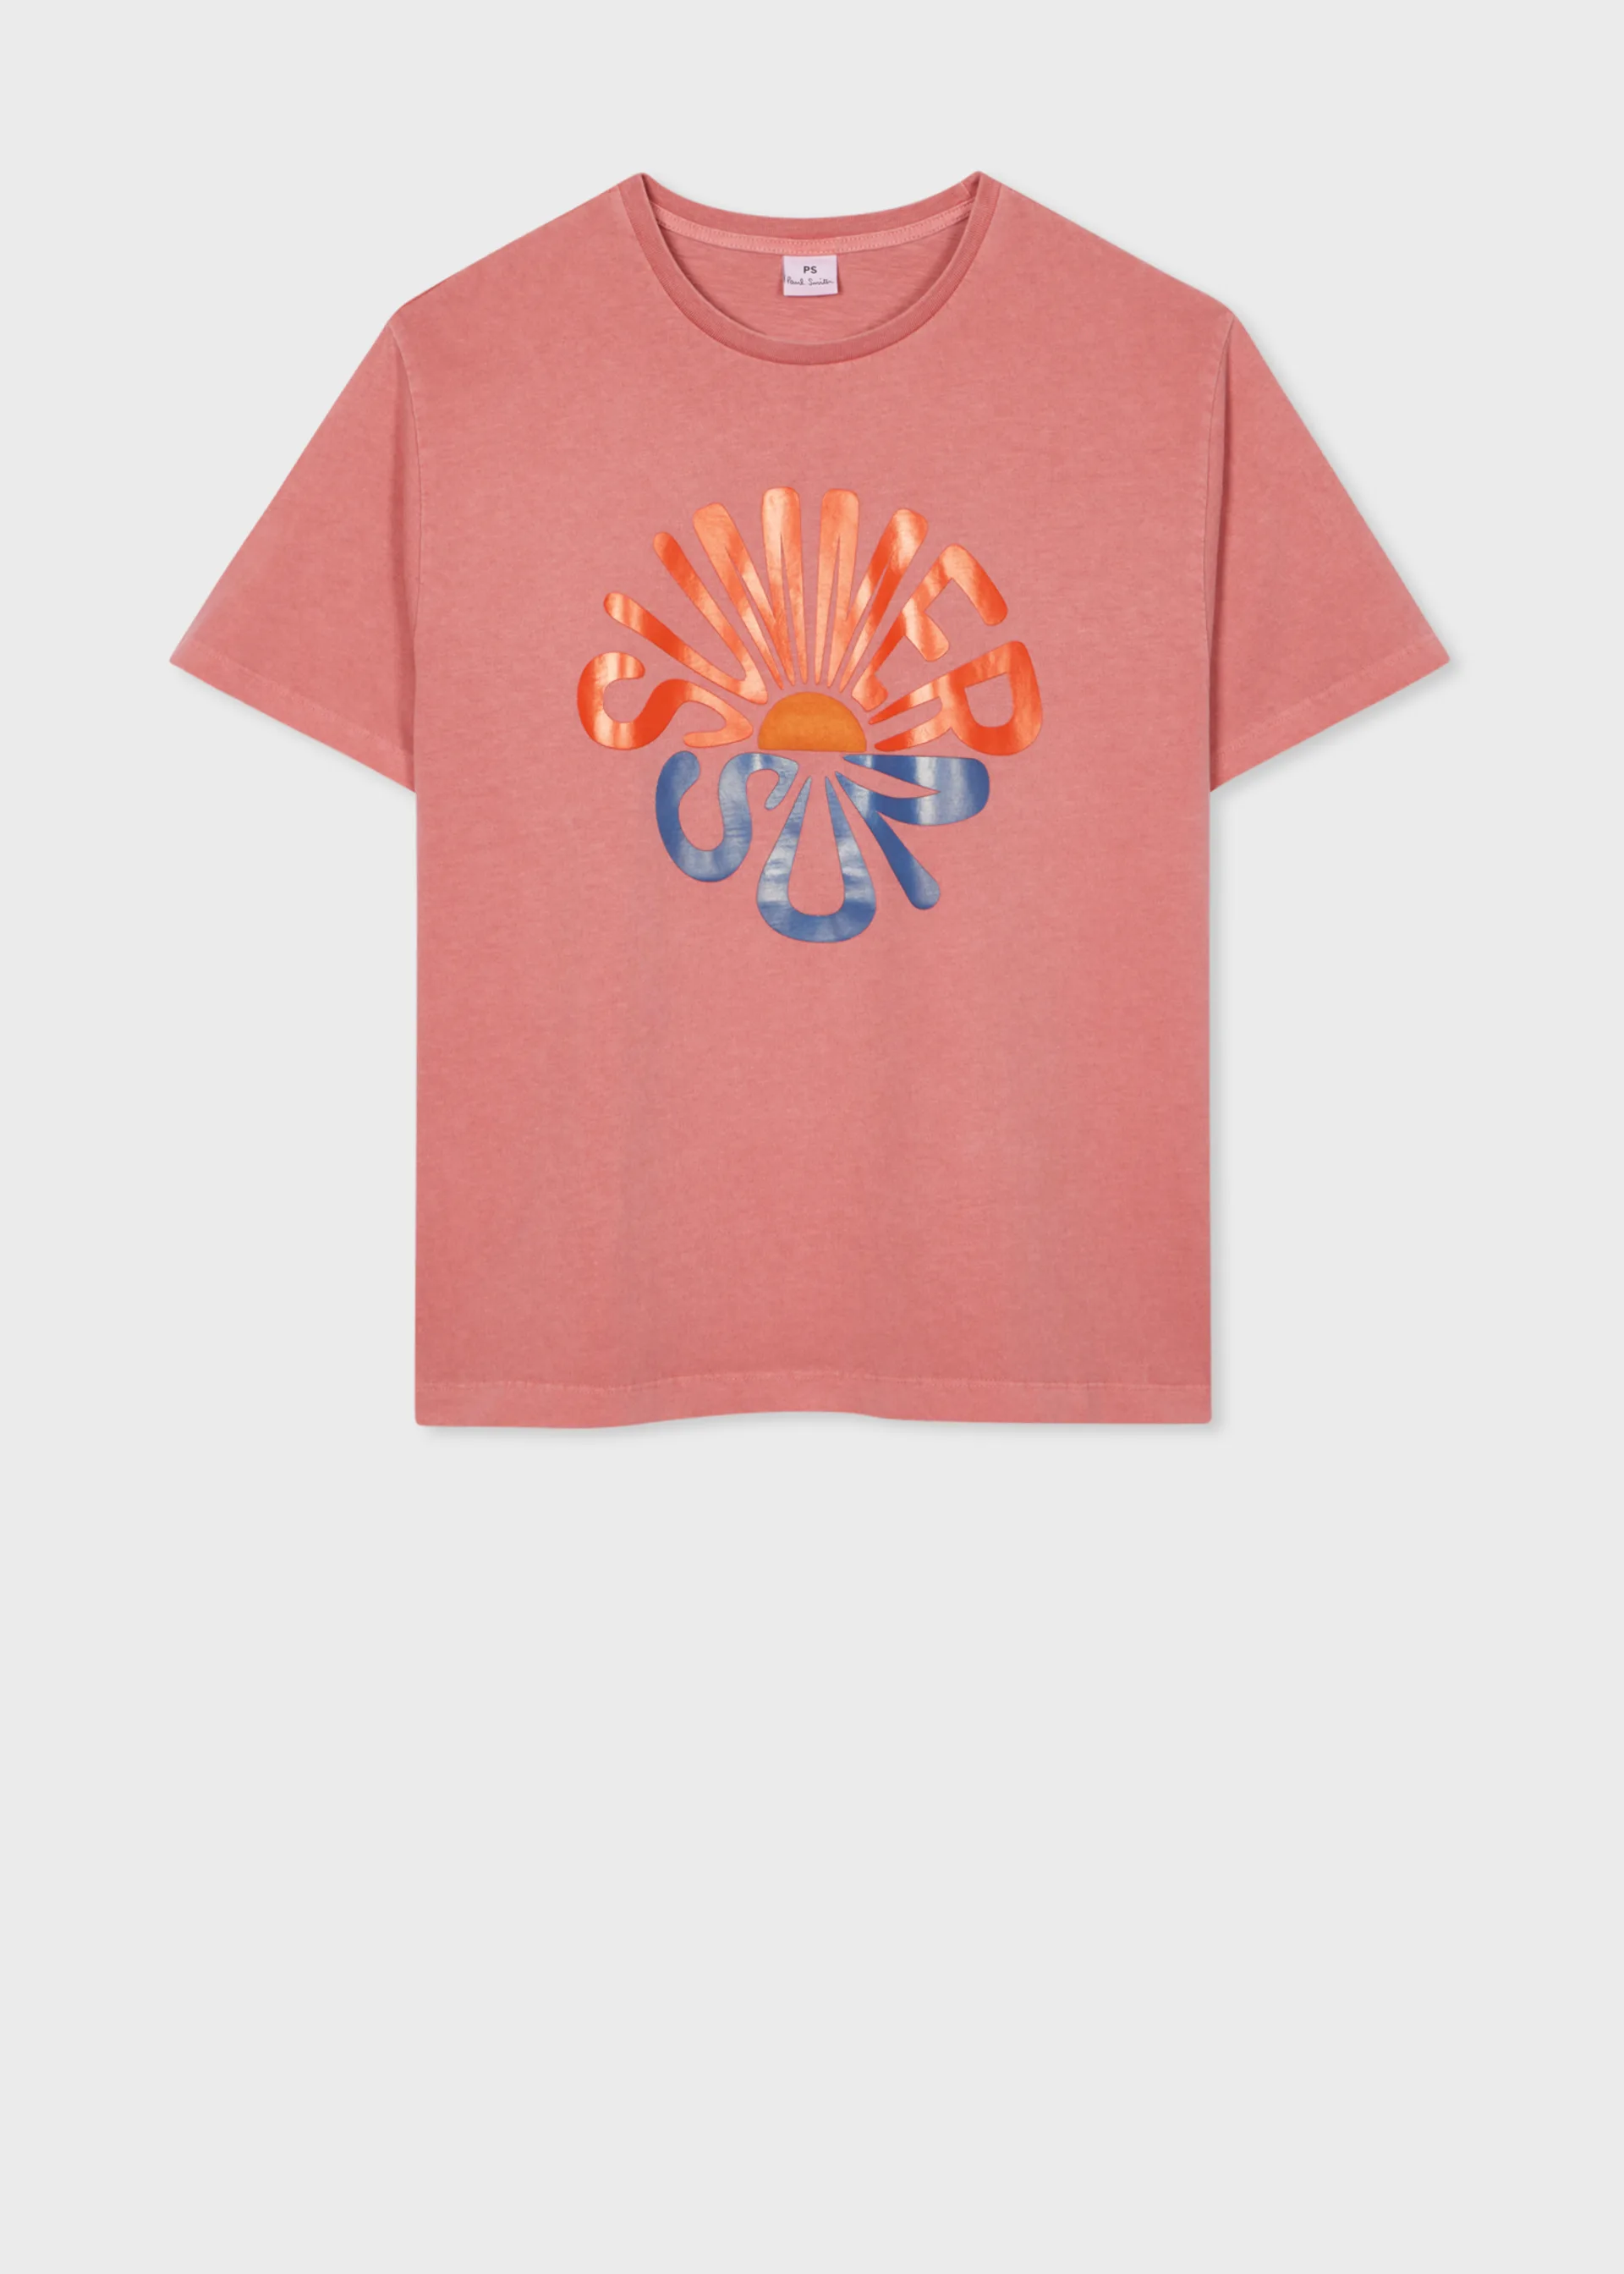 Paul Smith Summer Sun Printed Womens T Shirt